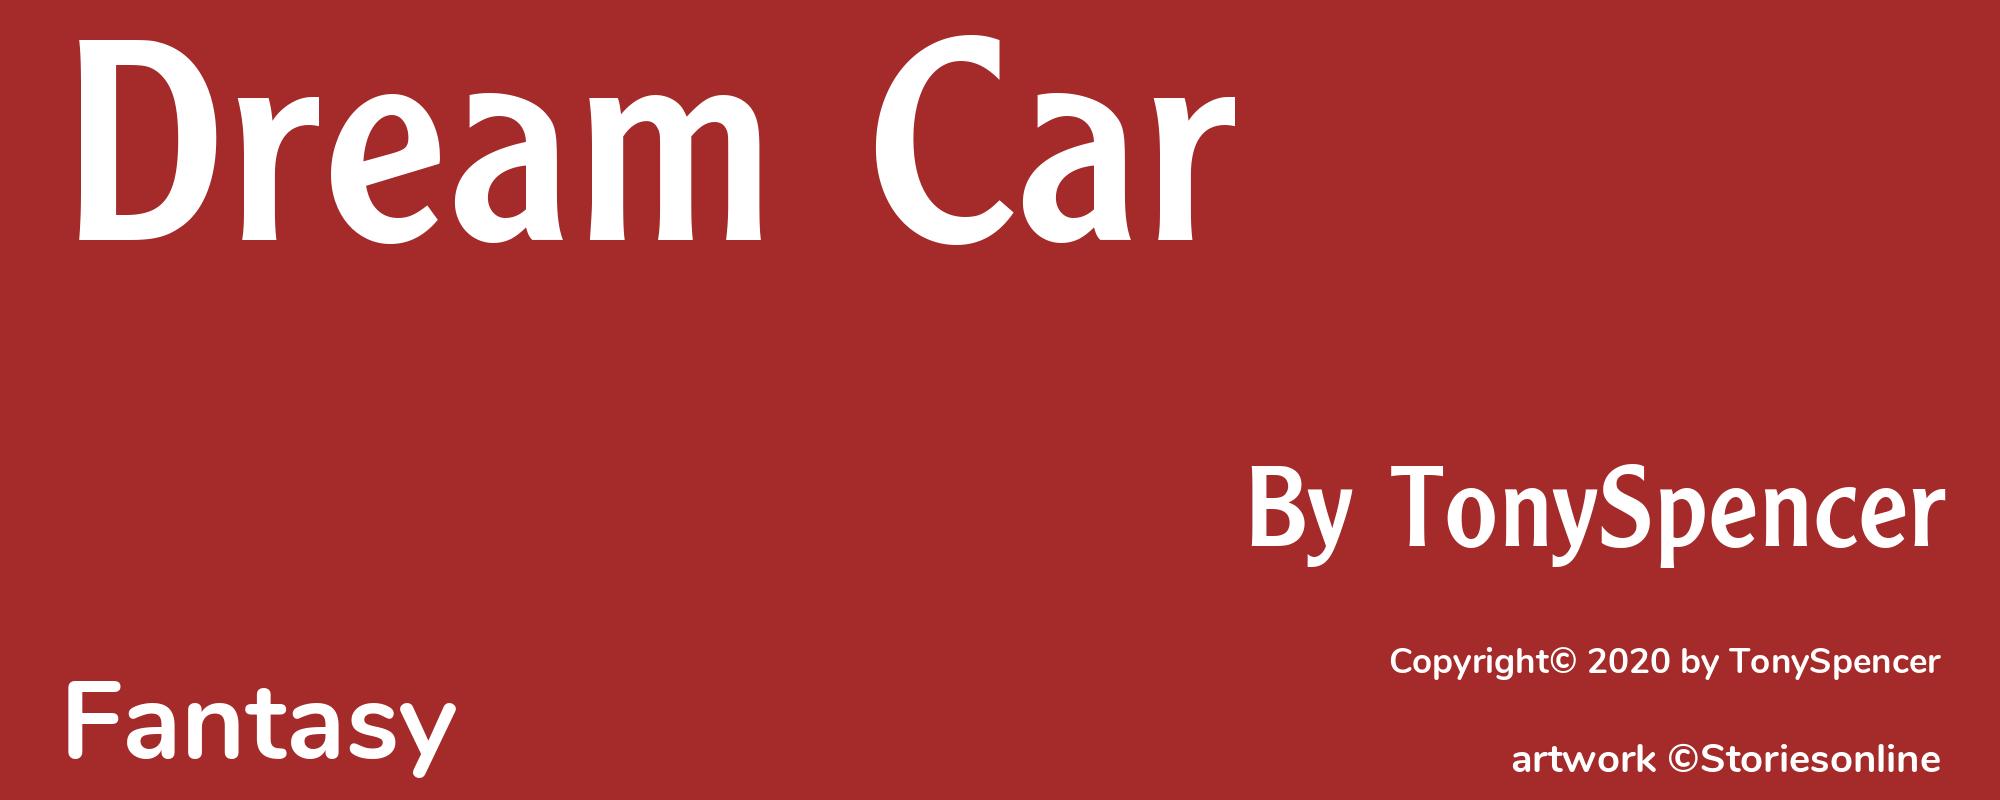 Dream Car - Cover